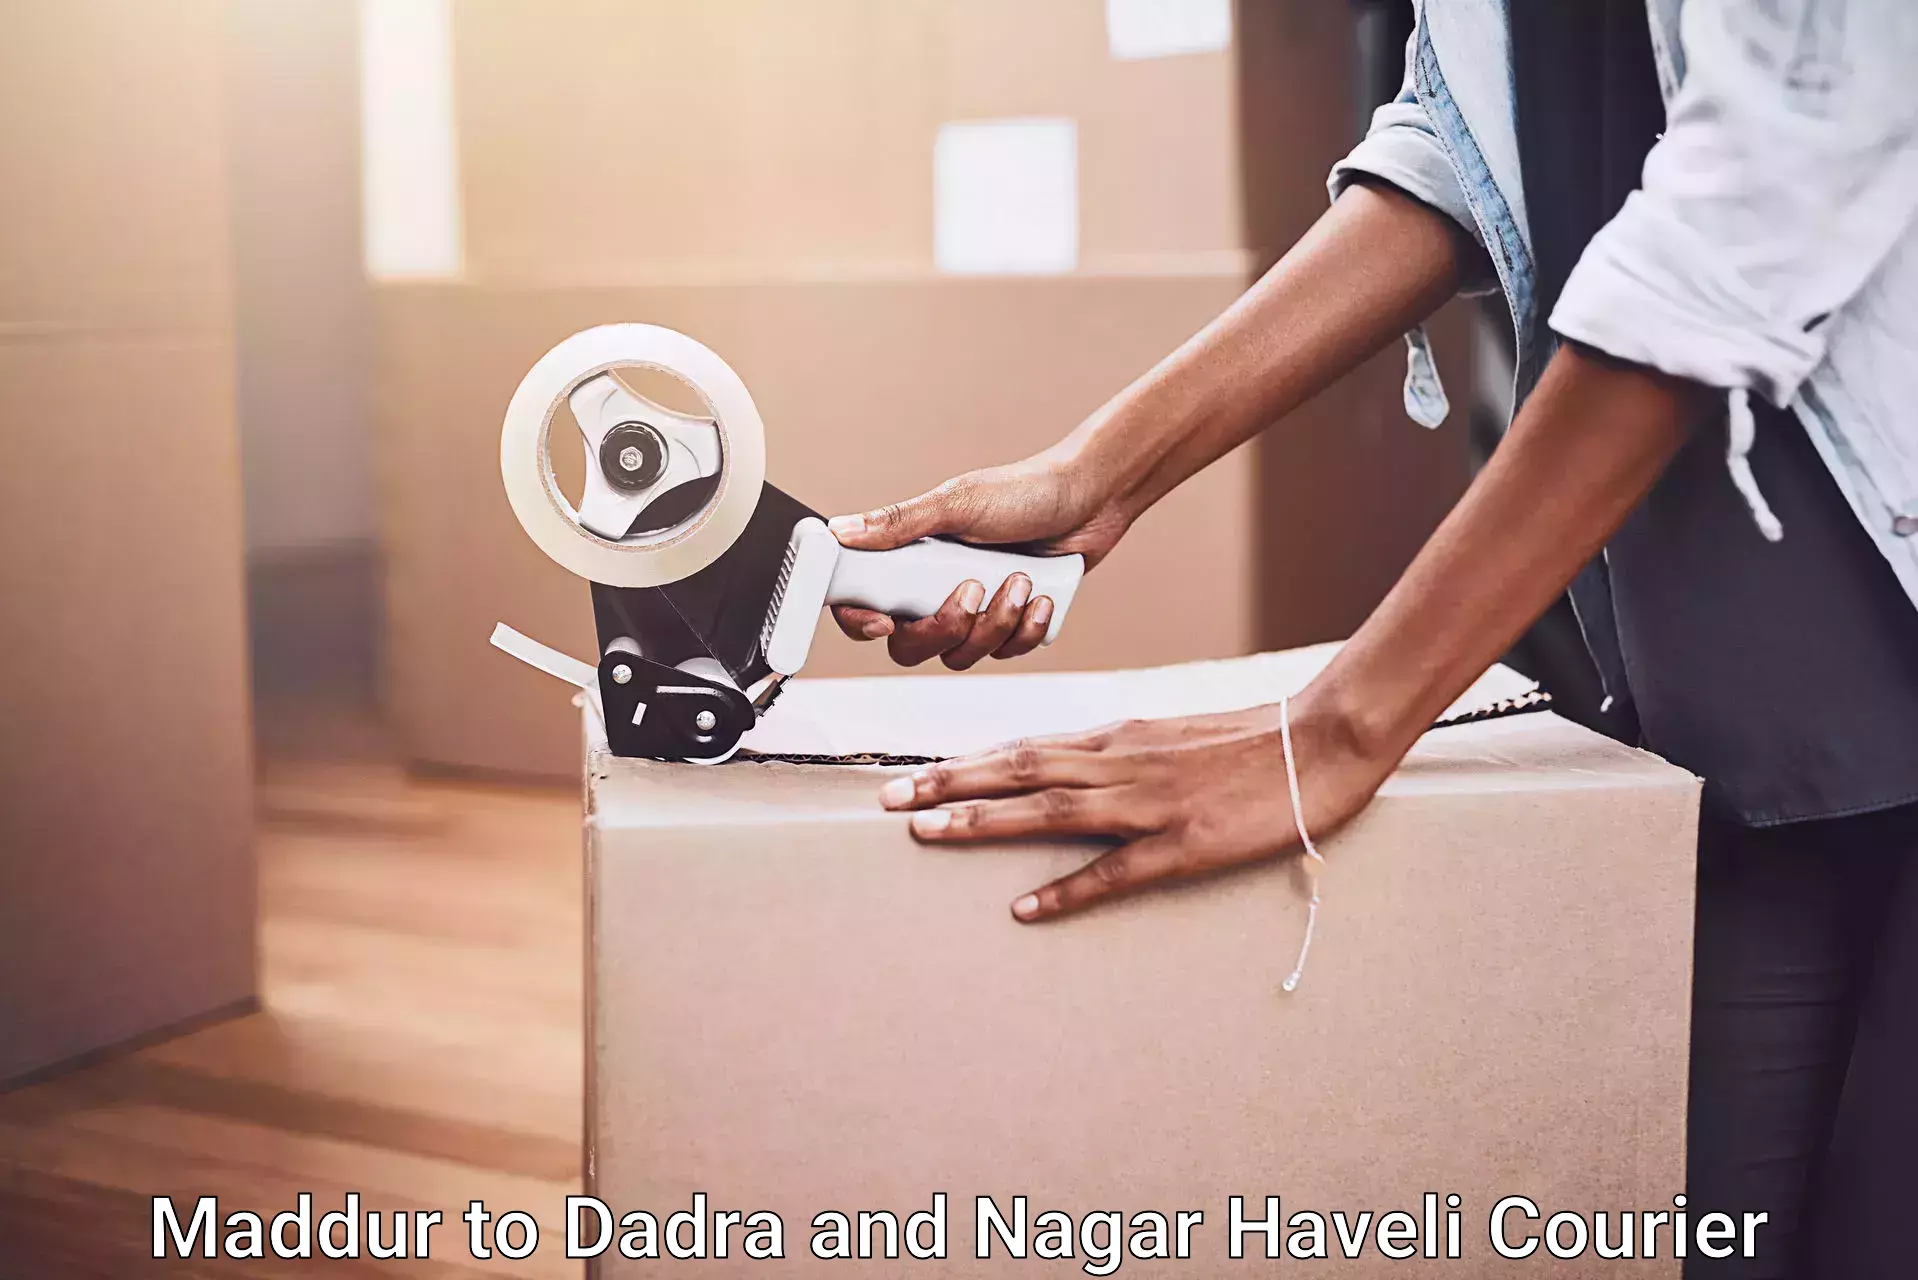 Furniture moving service Maddur to Dadra and Nagar Haveli